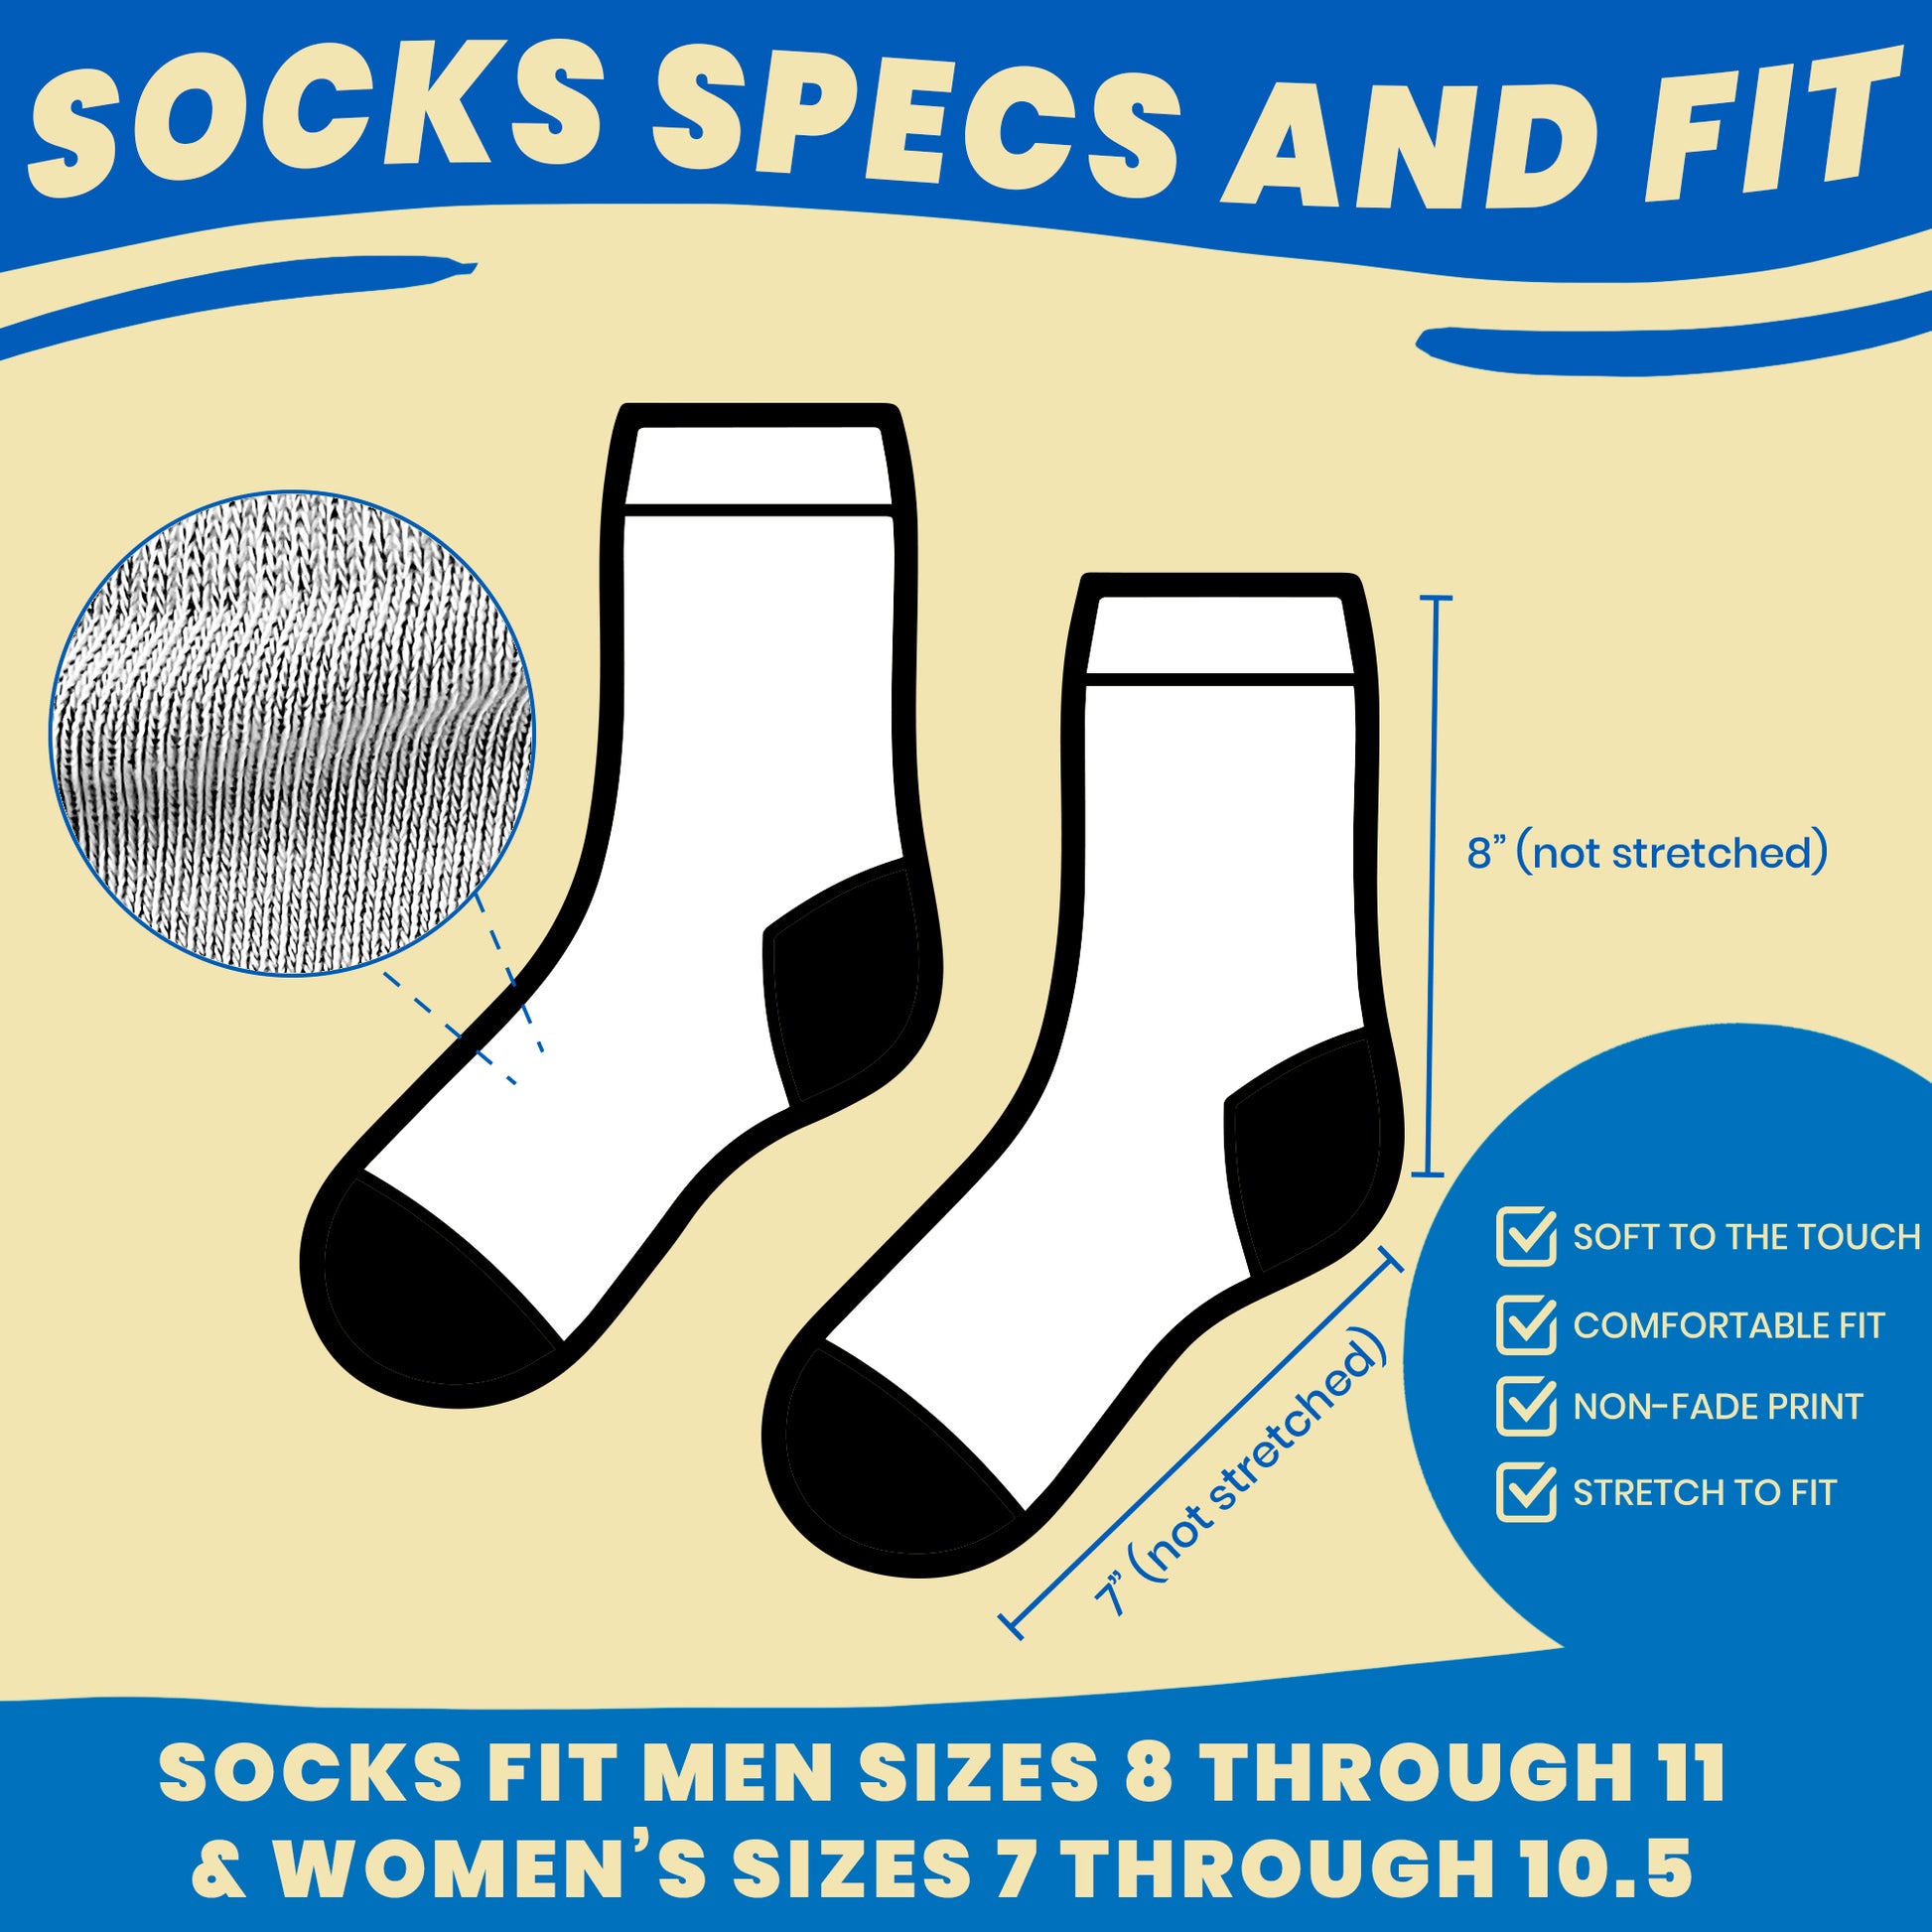 personalized softball socks with real photos on cartoon bodies socks specs